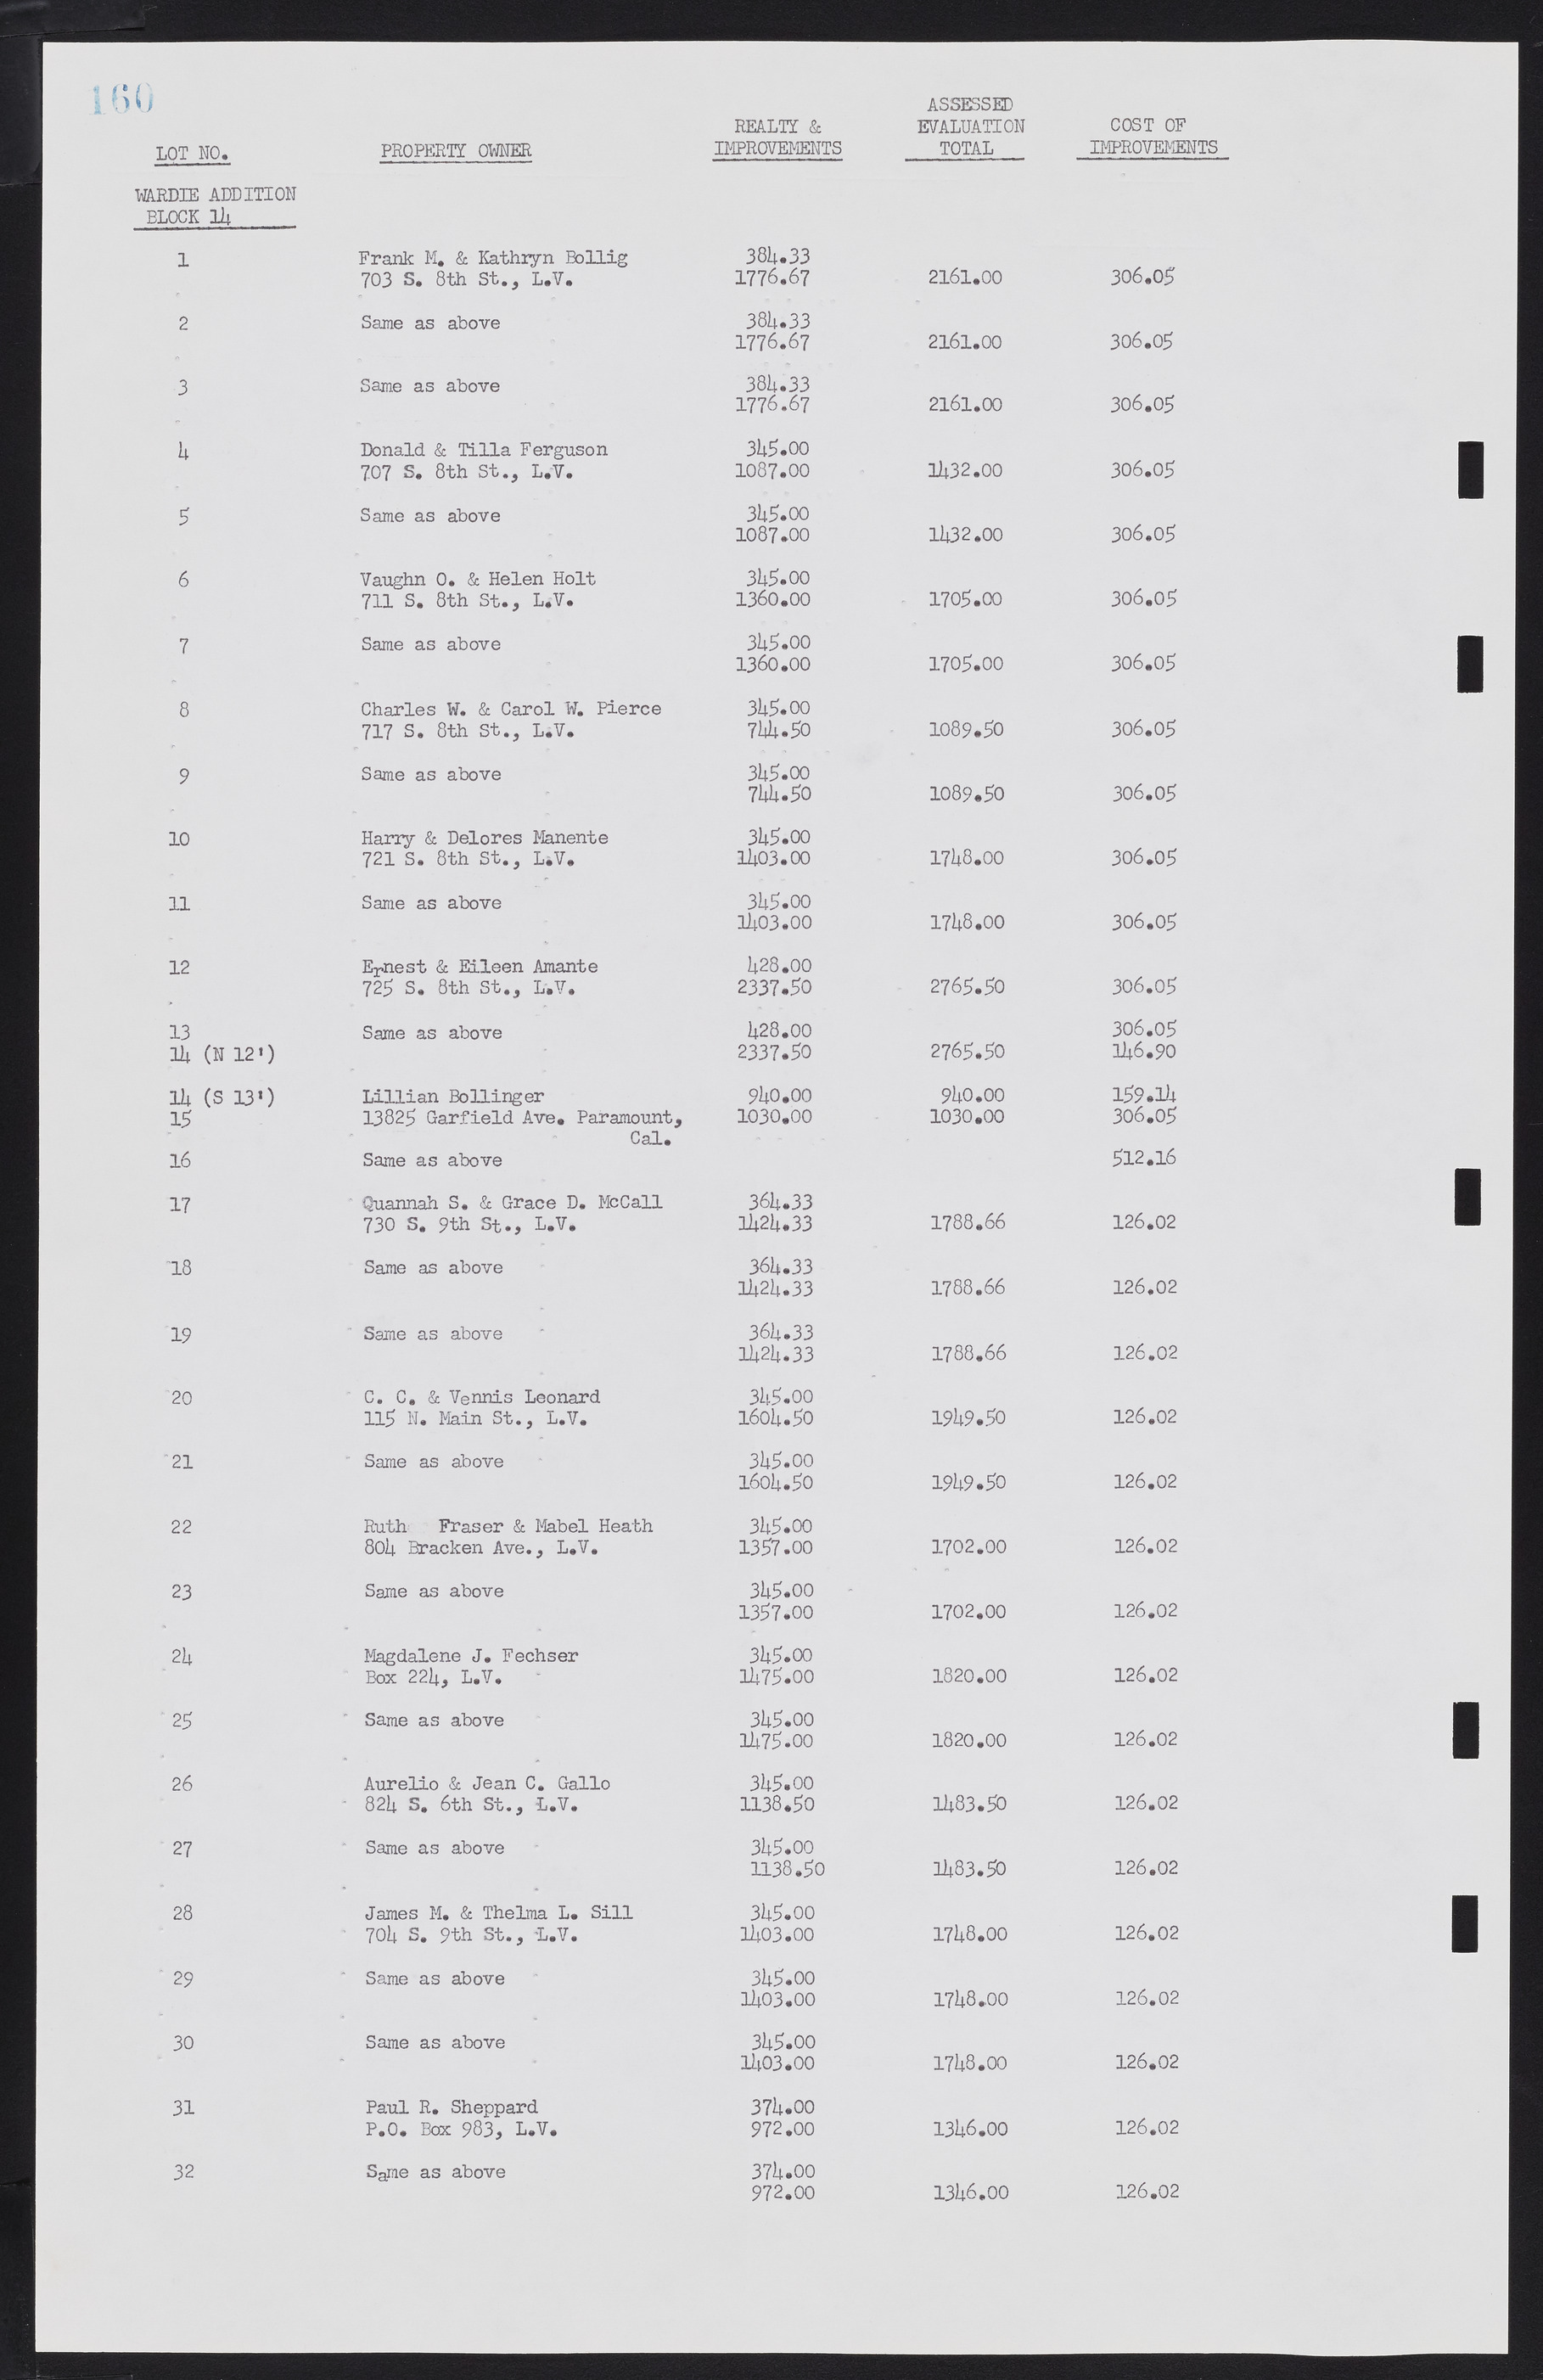 Las Vegas City Commission Minutes, February 17, 1954 to September 21, 1955, lvc000009-166